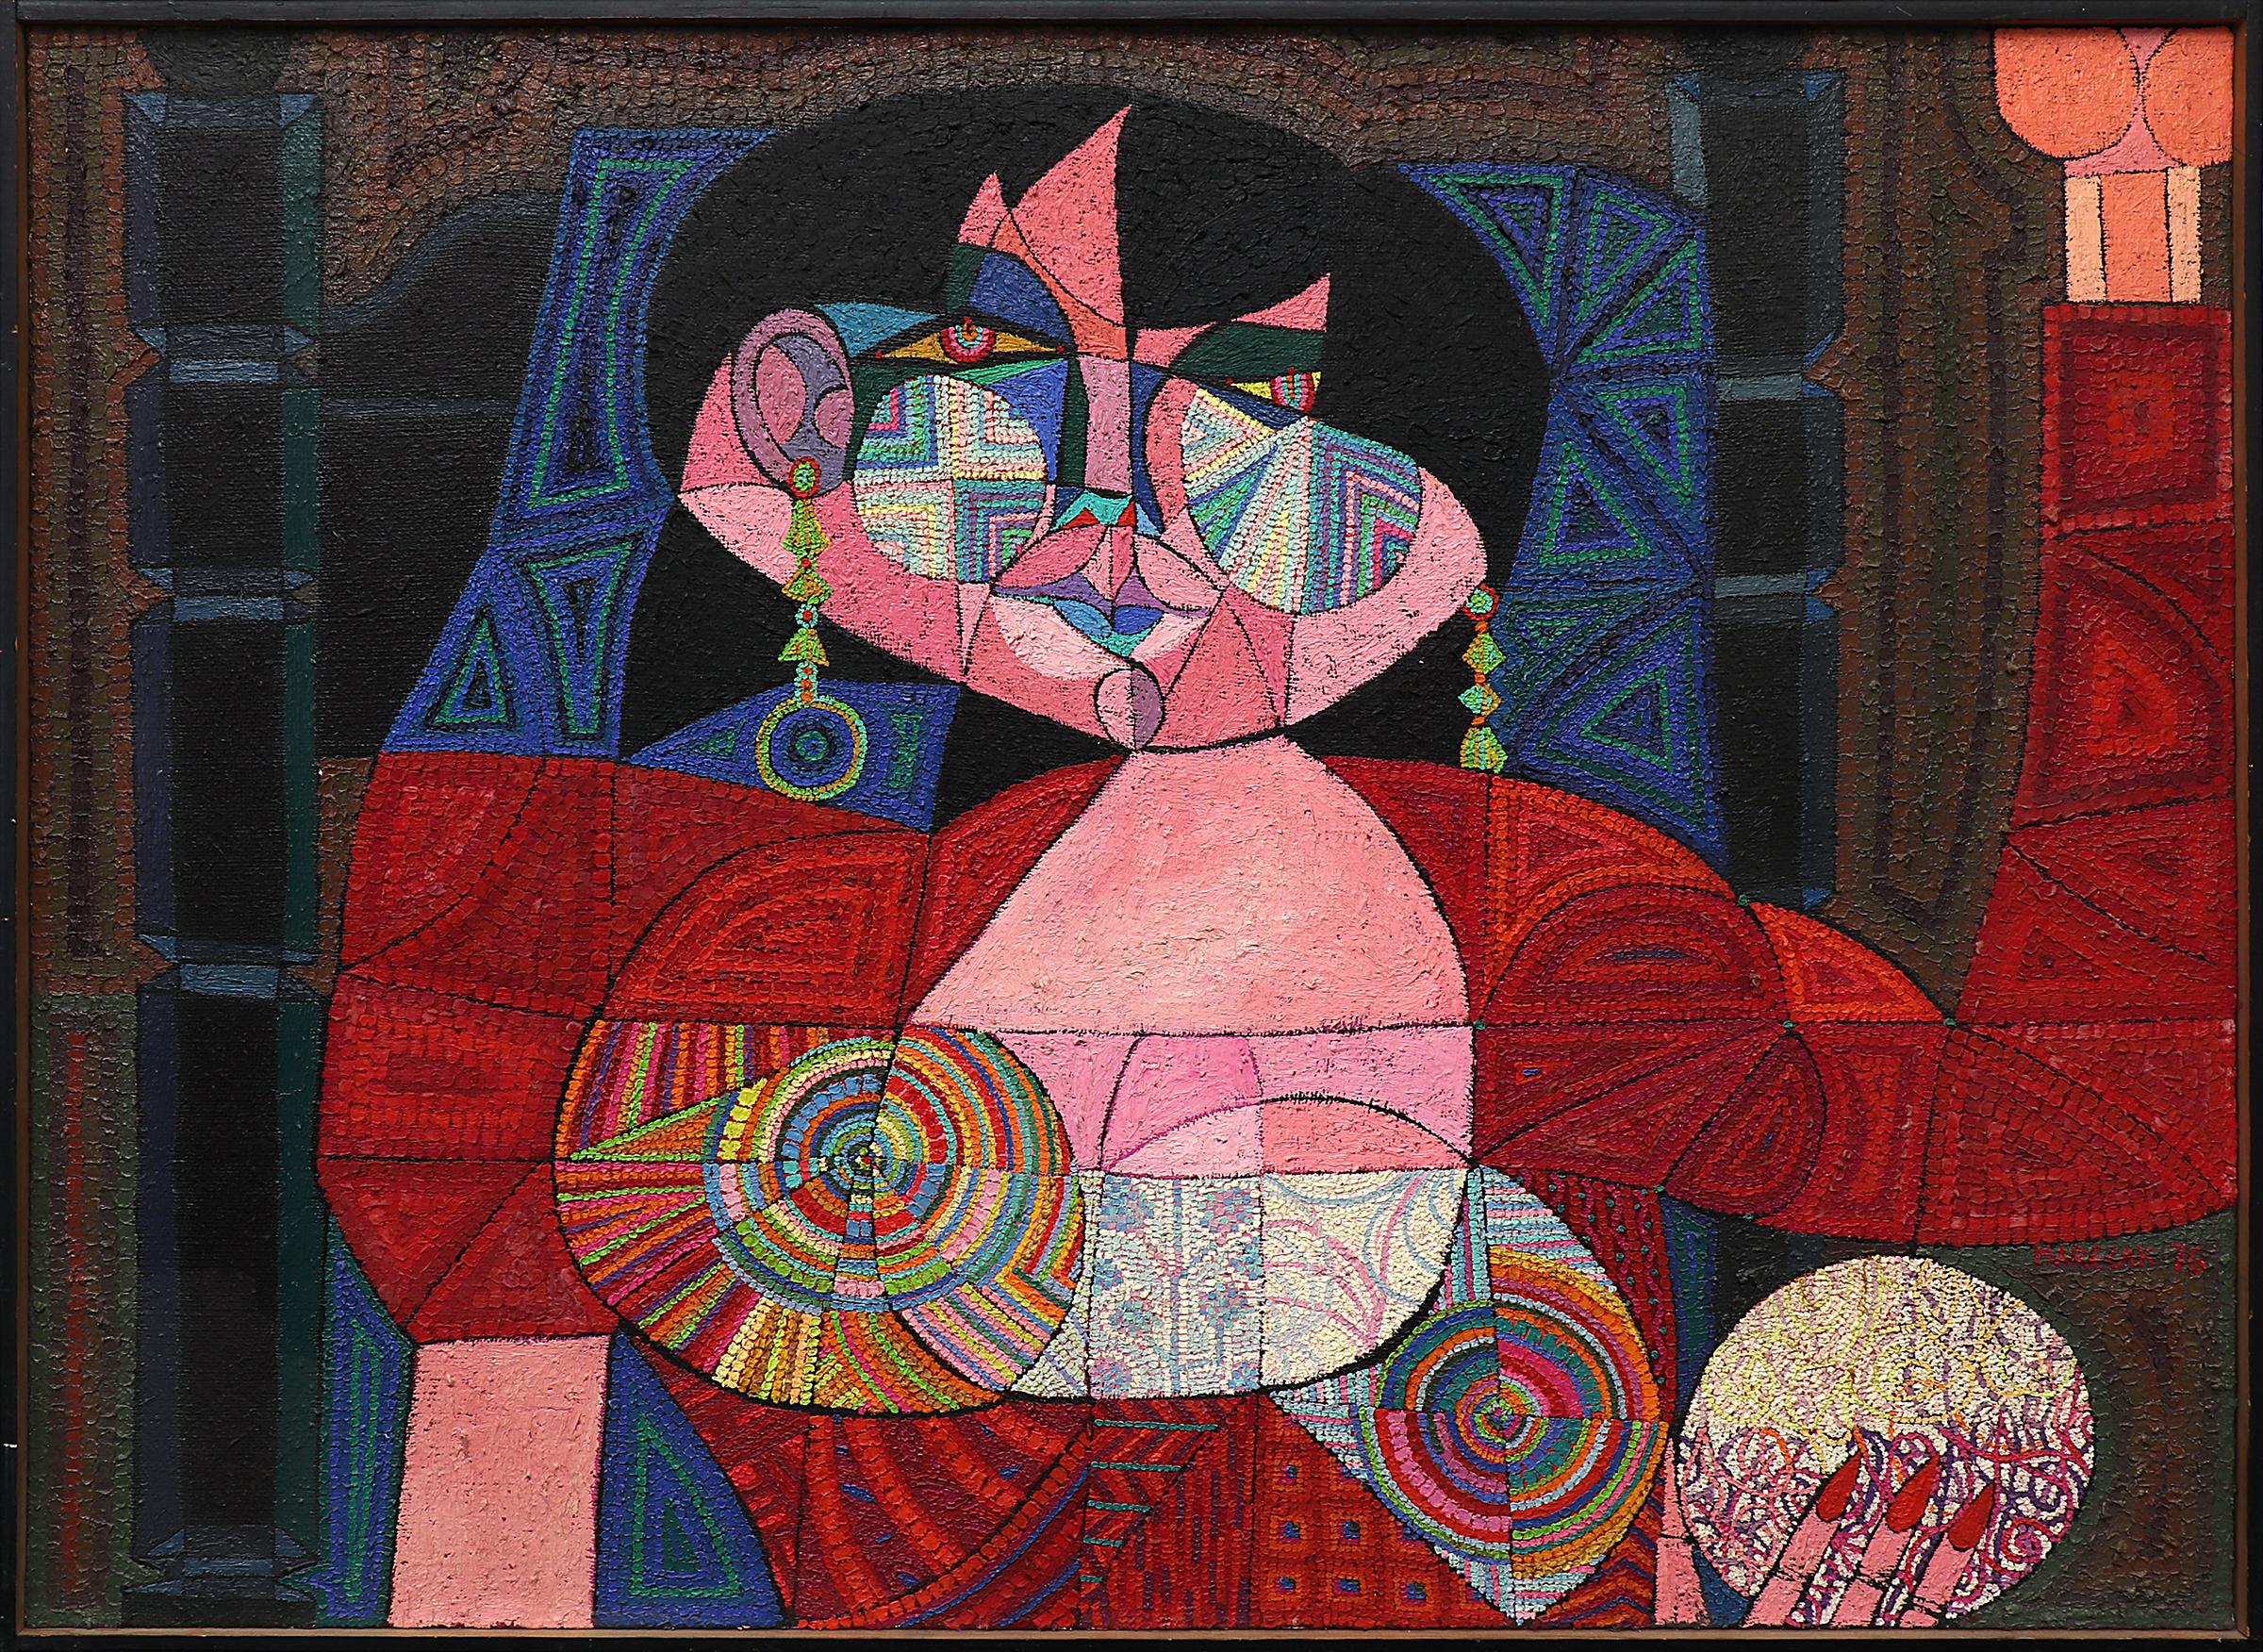 Abstraktes figuratives Ölgemälde Sybil (Die Göttin), 1970er Jahre, Rosa, Blau, Rot